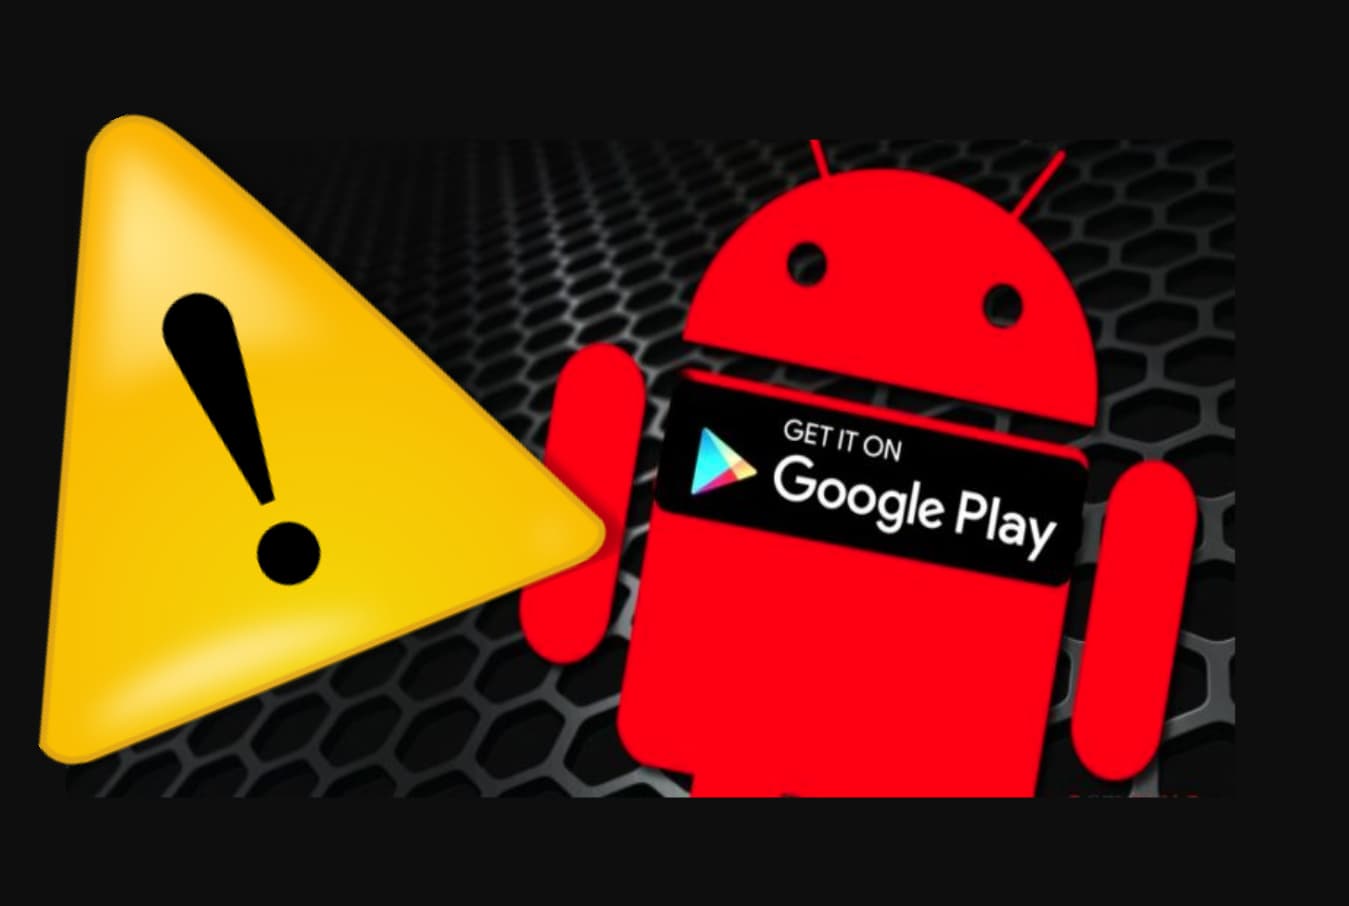 google play sklep malware wirusy trojany